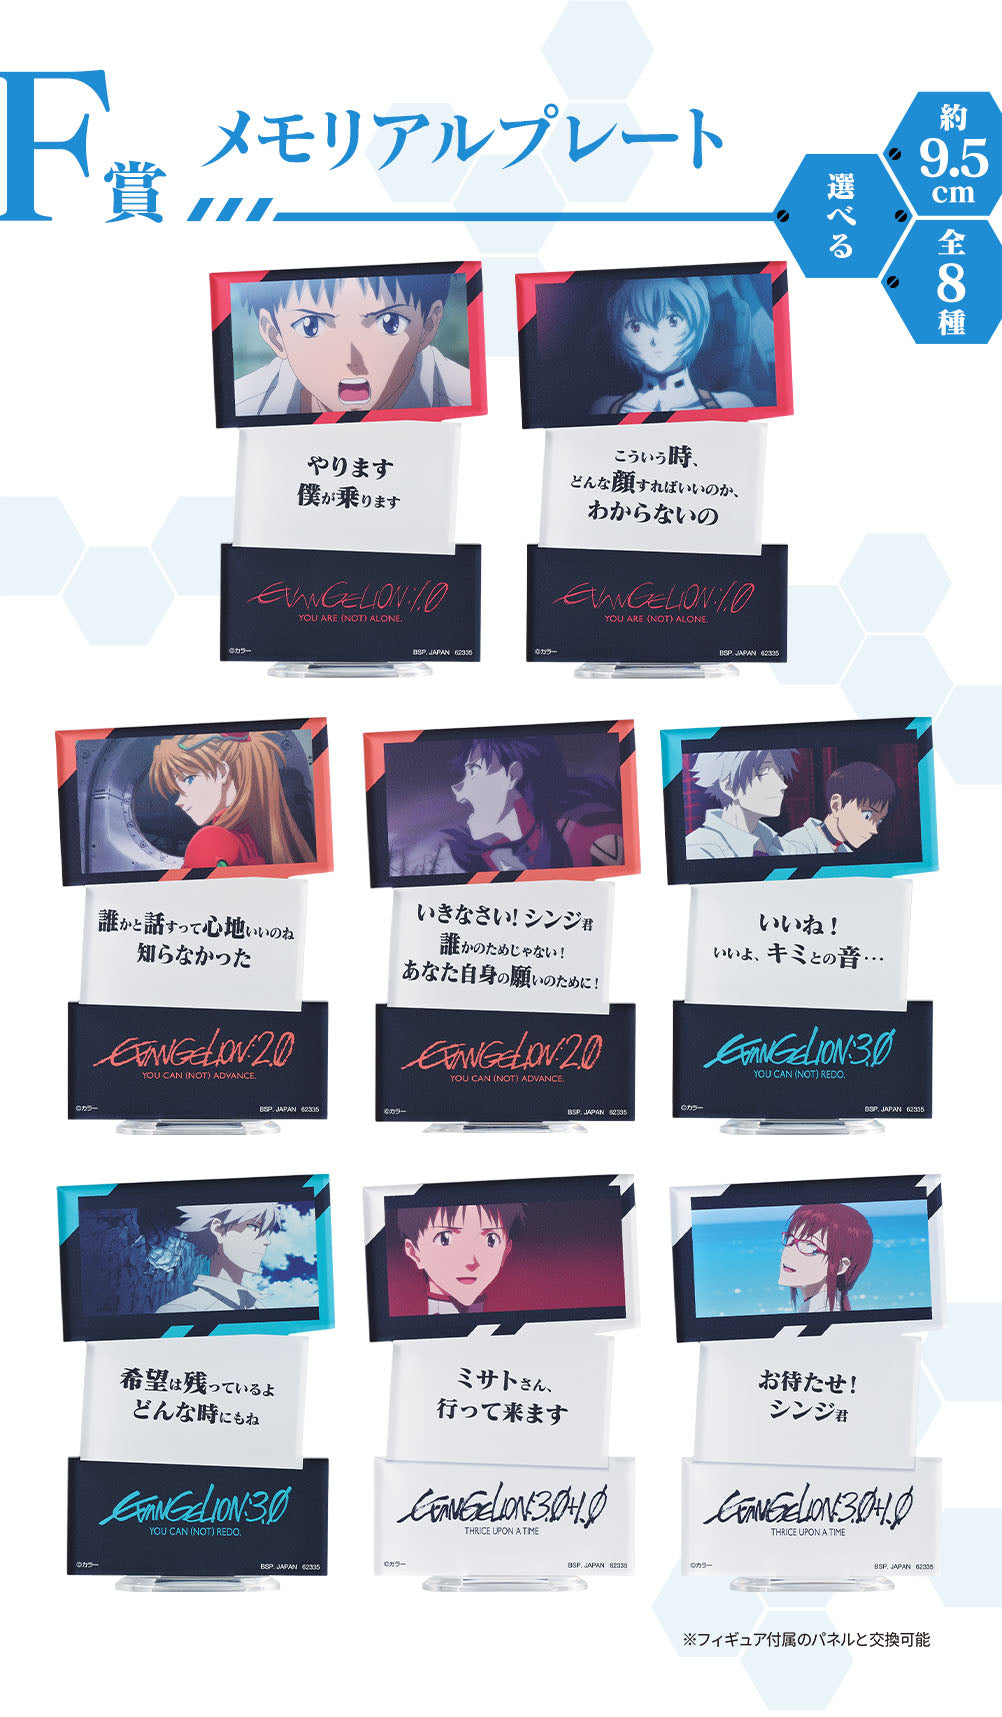 Ichiban Kuji Evangelion -Eva Pilot, Gather! ~-Bandai-Ace Cards &amp; Collectibles